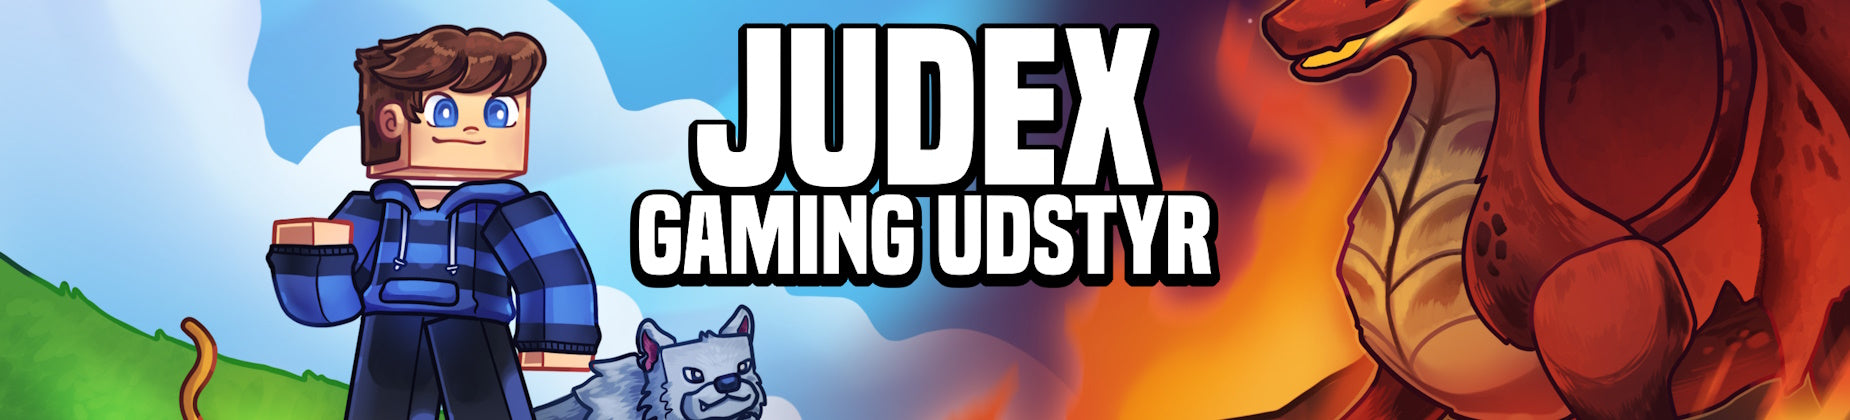 judex gaming udstyr | Merchandise fra geekd og judex